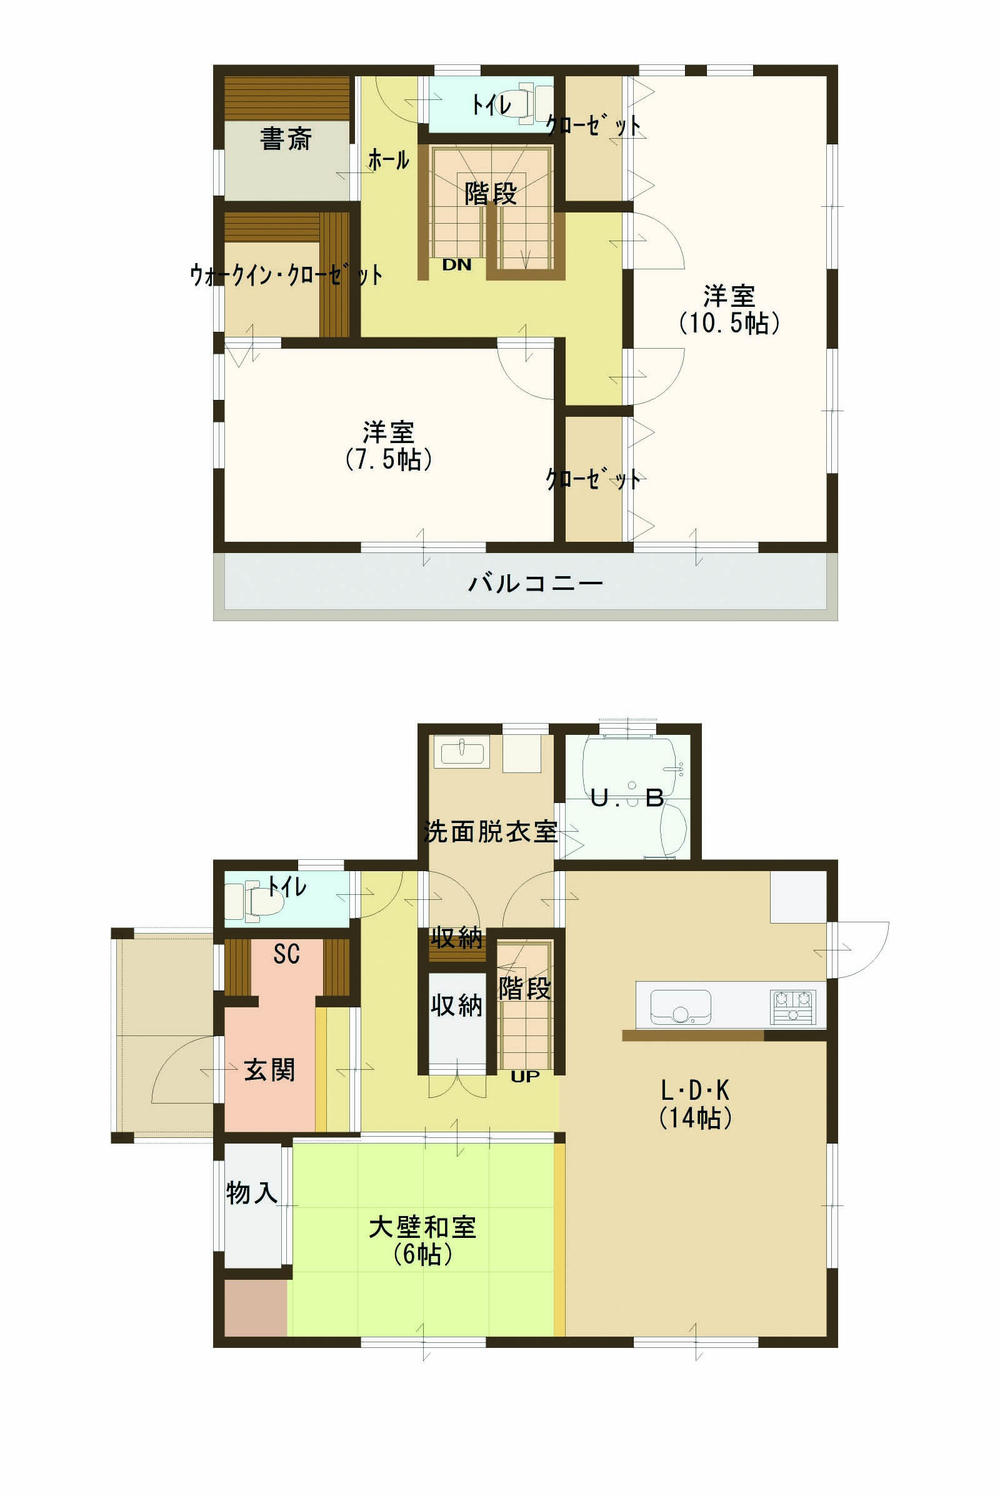 Building plan example (floor plan). Building plan example 4LDK, Land price 10.4 million yen, Land area 231.42 sq m , Building price 15.4 million yen, Building area 110.97 sq m